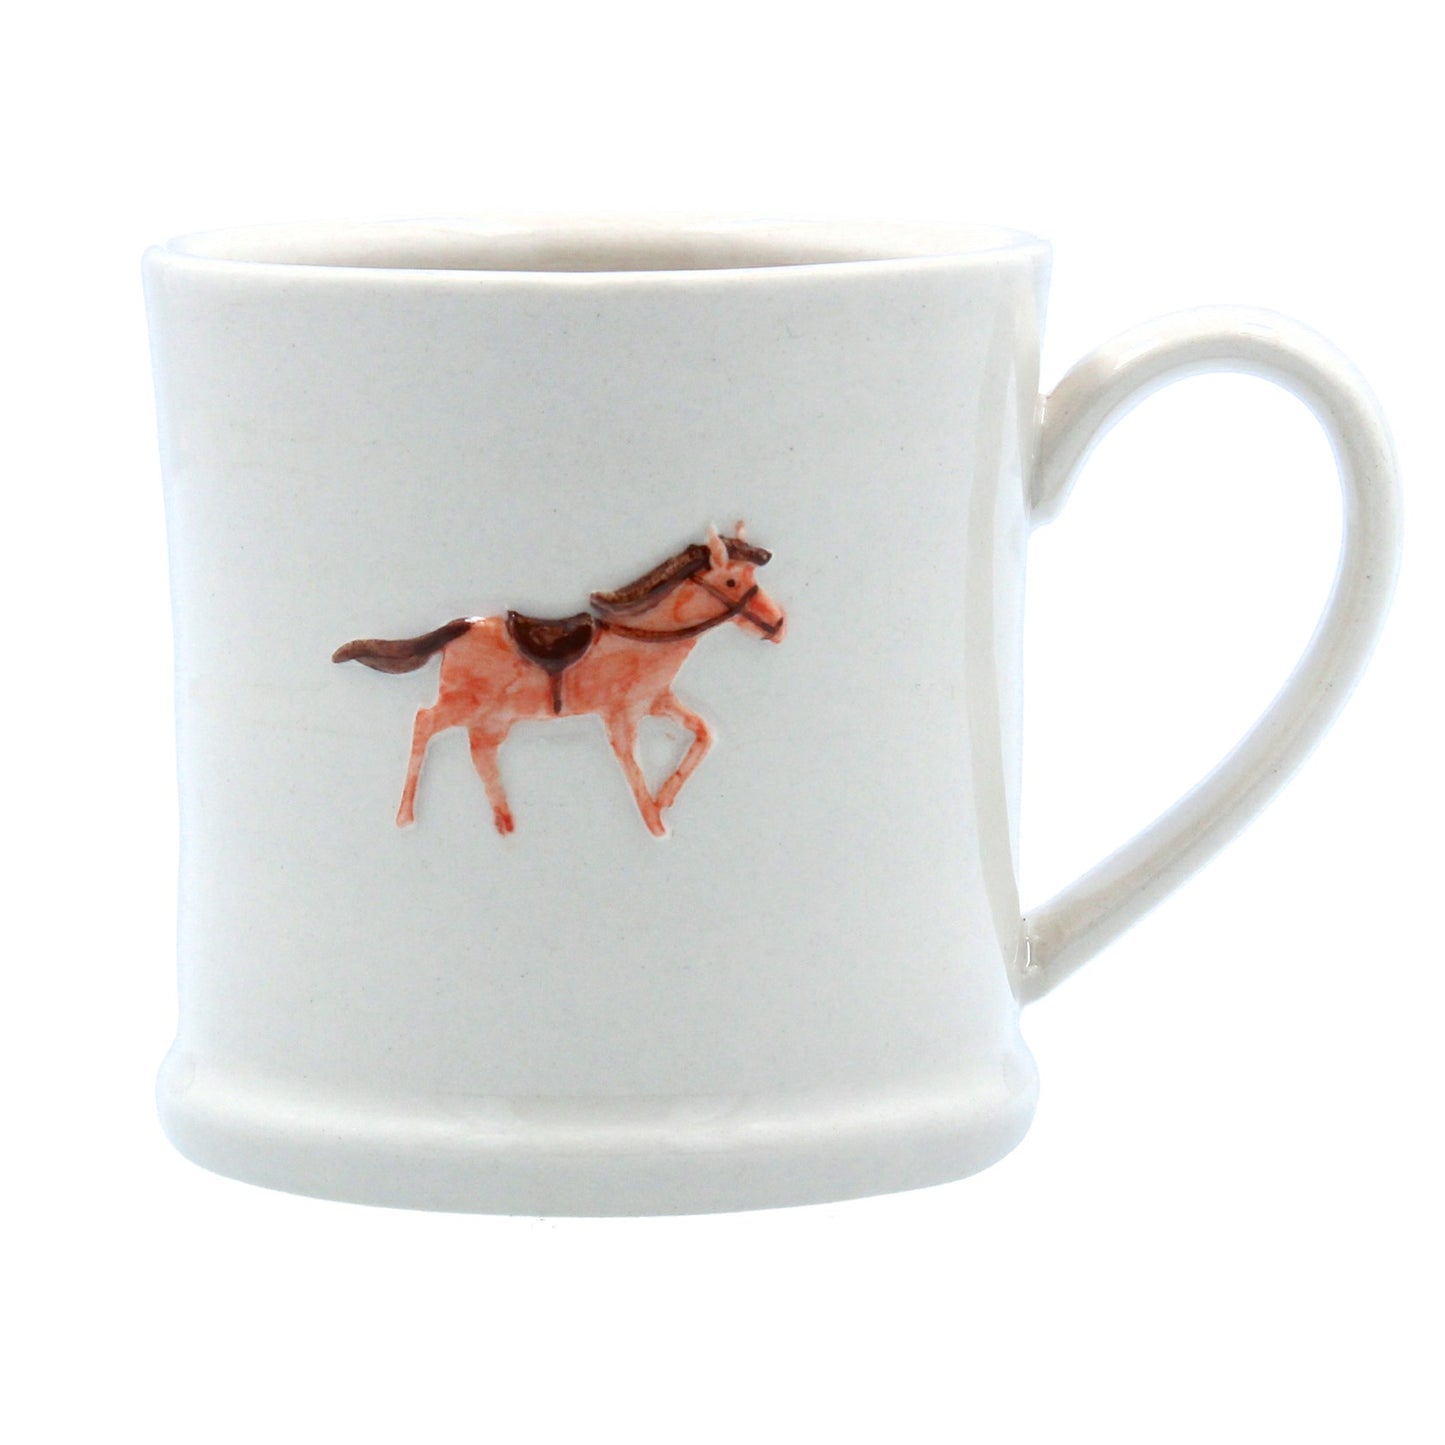 Mini Horse Ceramic Mug